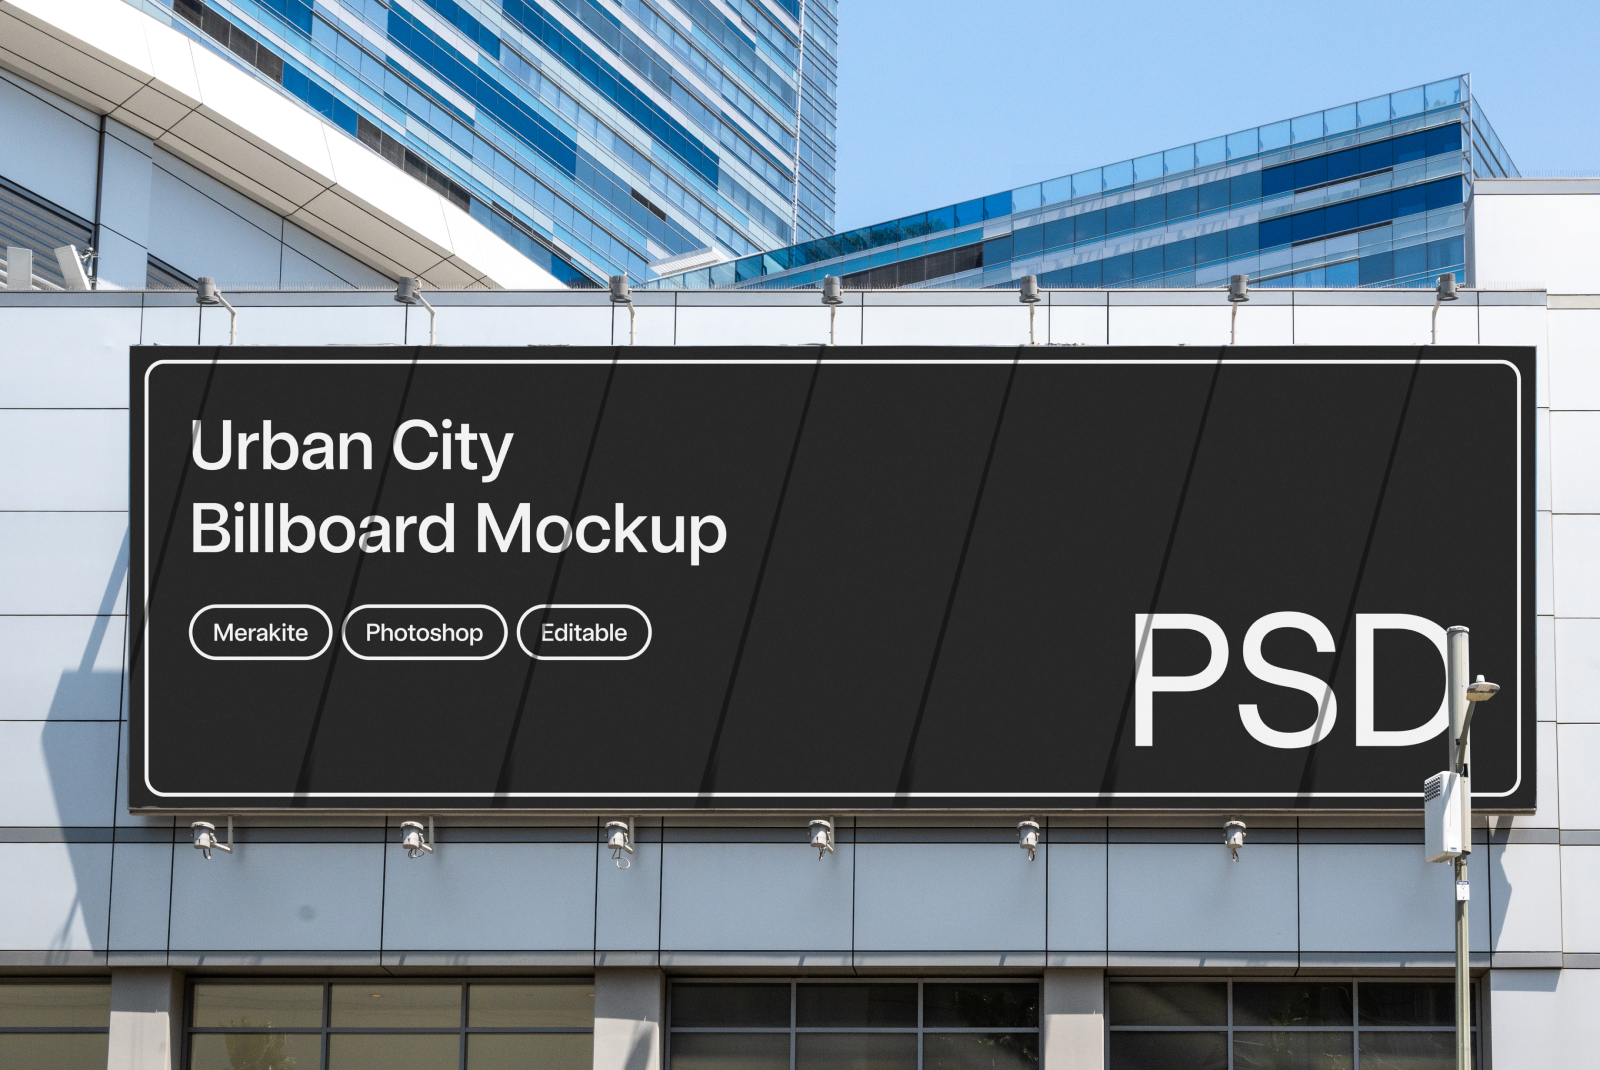 Urban City Billboard Mockup in PSD format, realistic outdoor advertising display, designer resource, high-resolution editable graphic.